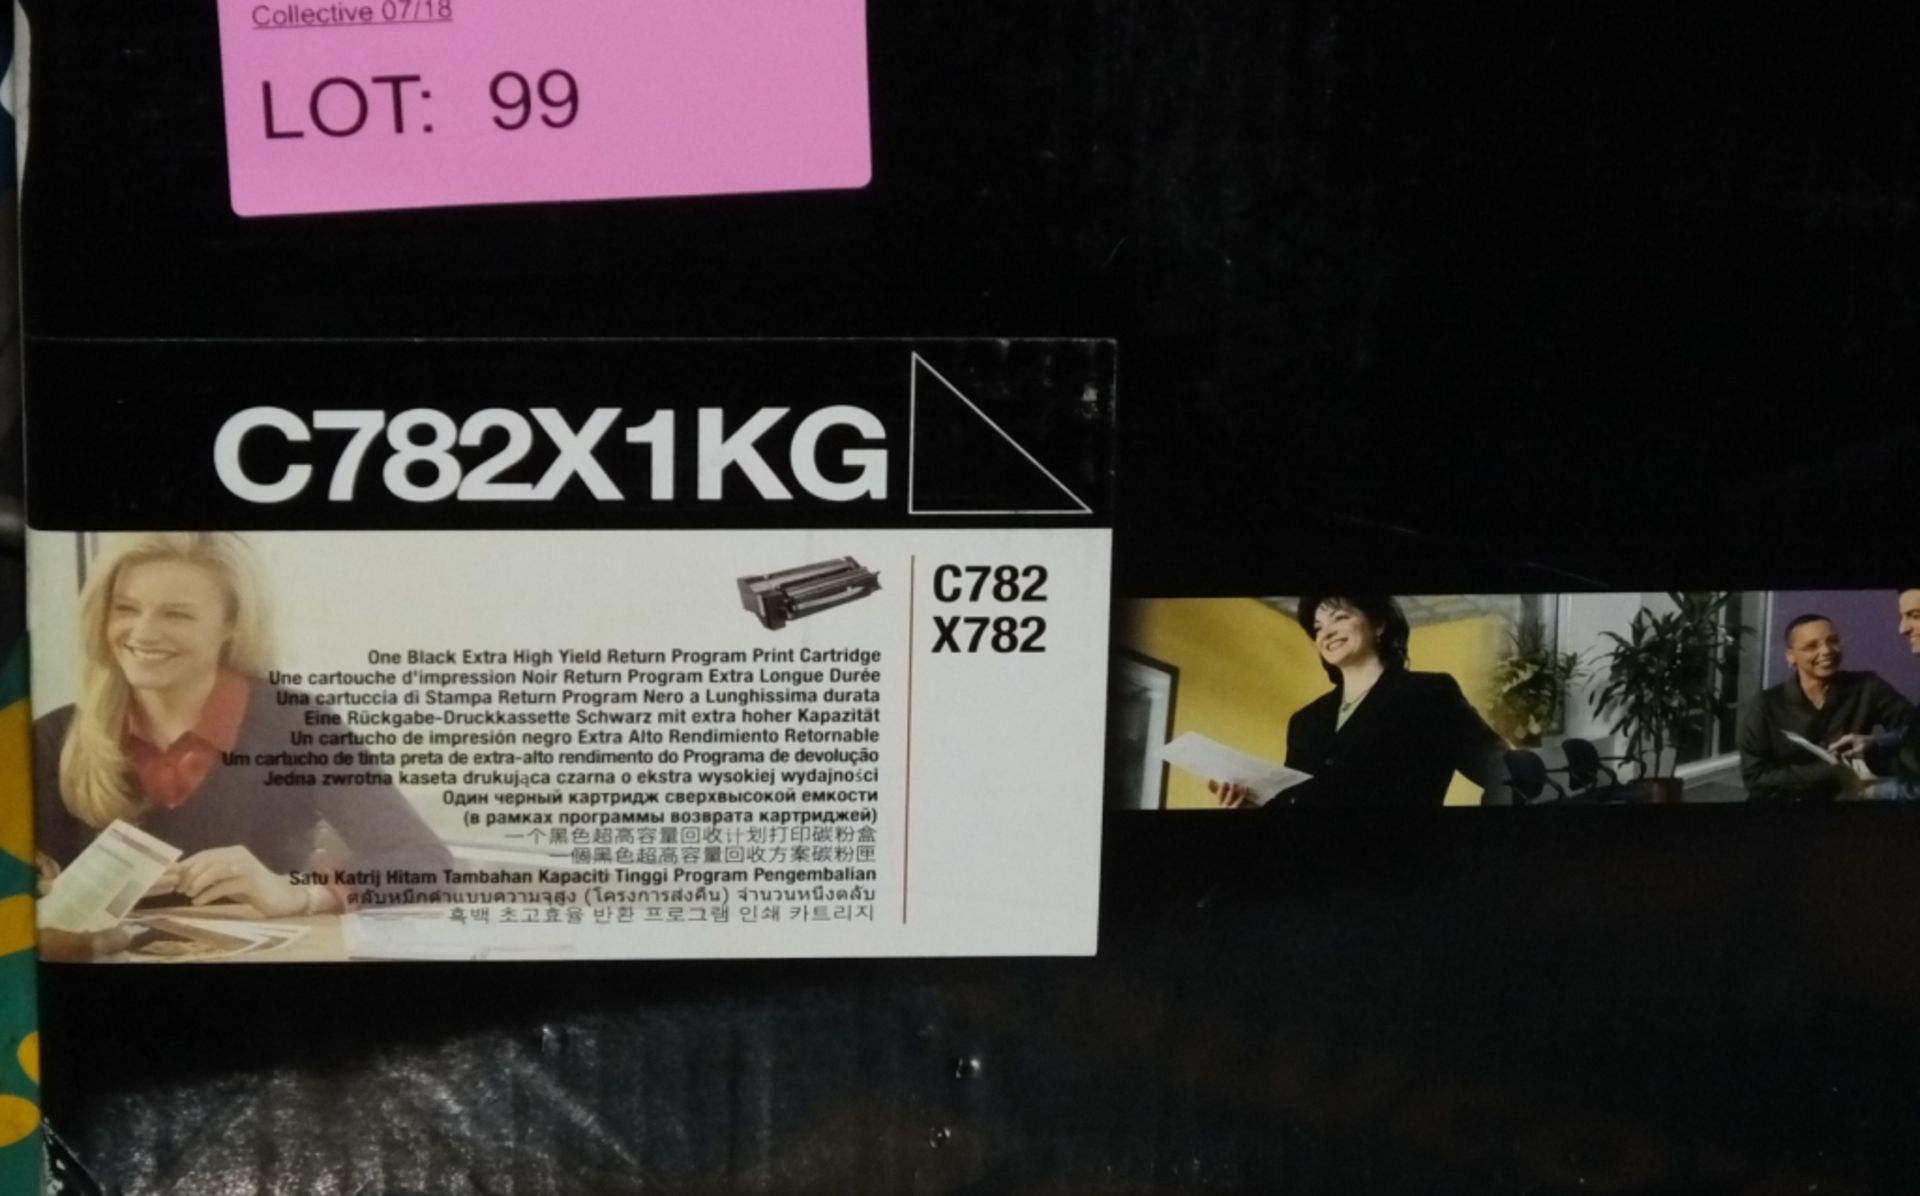 Lexmark C782X1KG - C782X782 - printer cartridge - Image 2 of 3